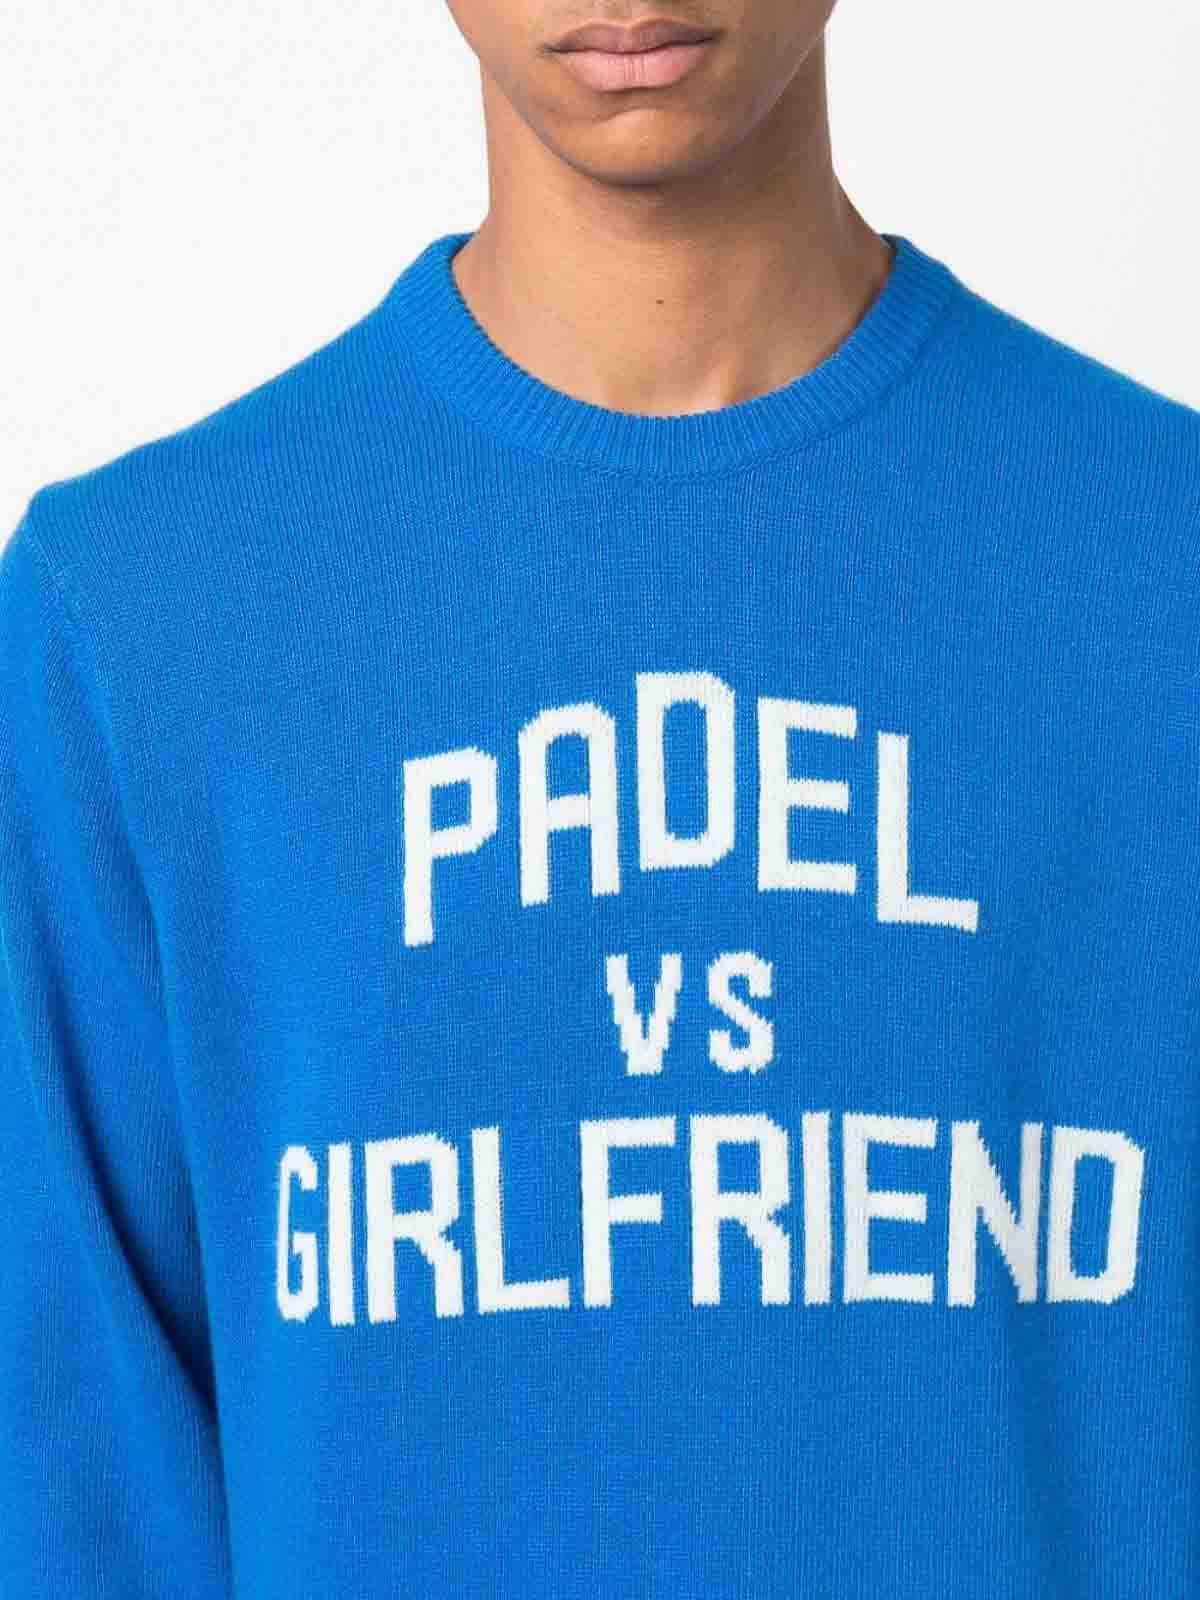 Shop Mc2 Saint Barth Padel Vs Girlfriend Sweater In Blue